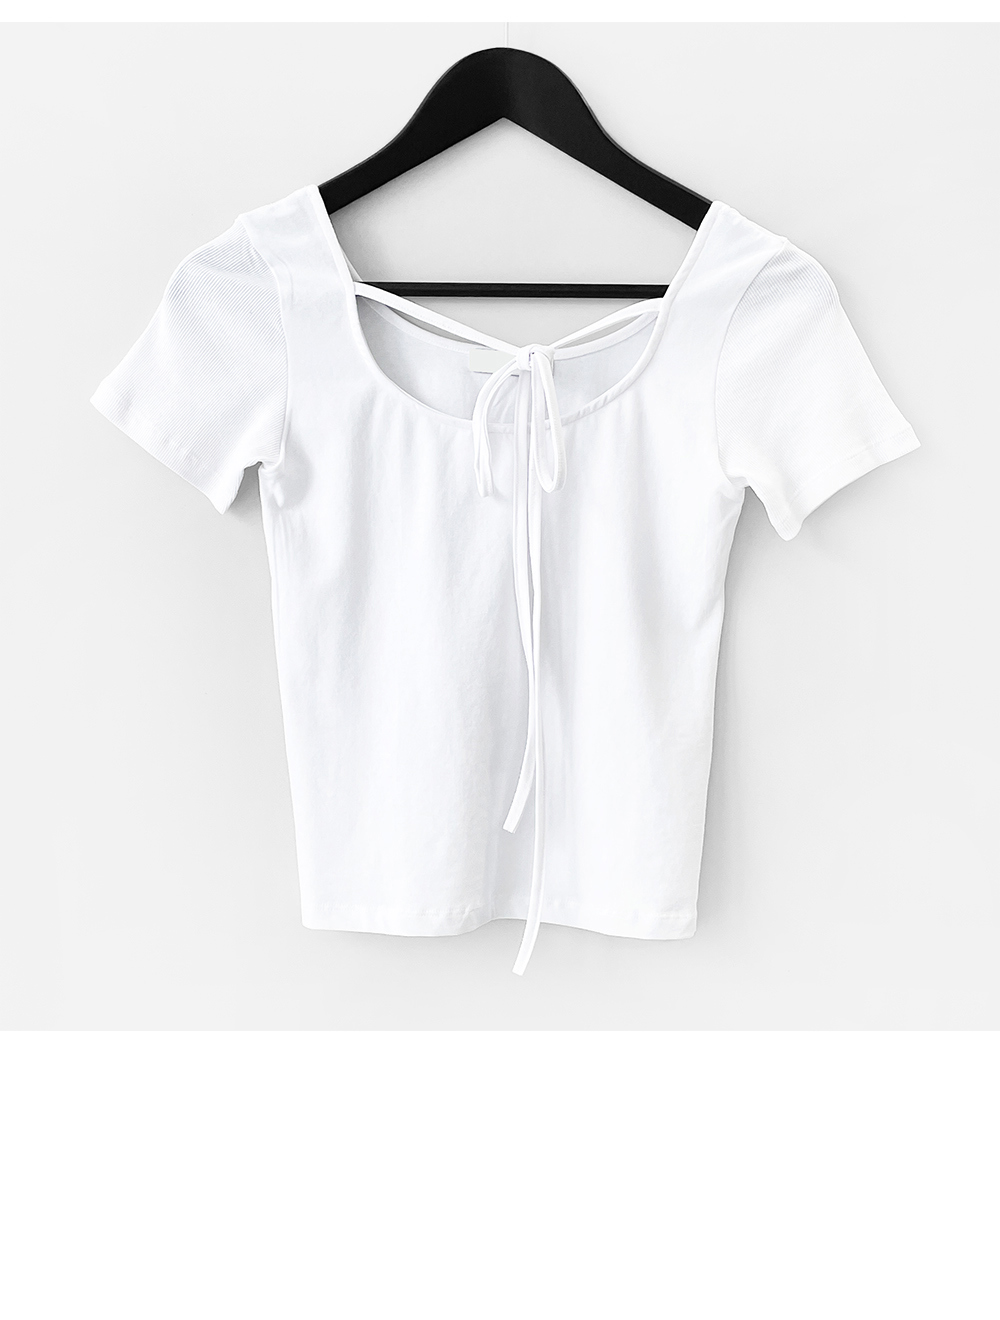 suspenders skirt/pants white color image-S1L10